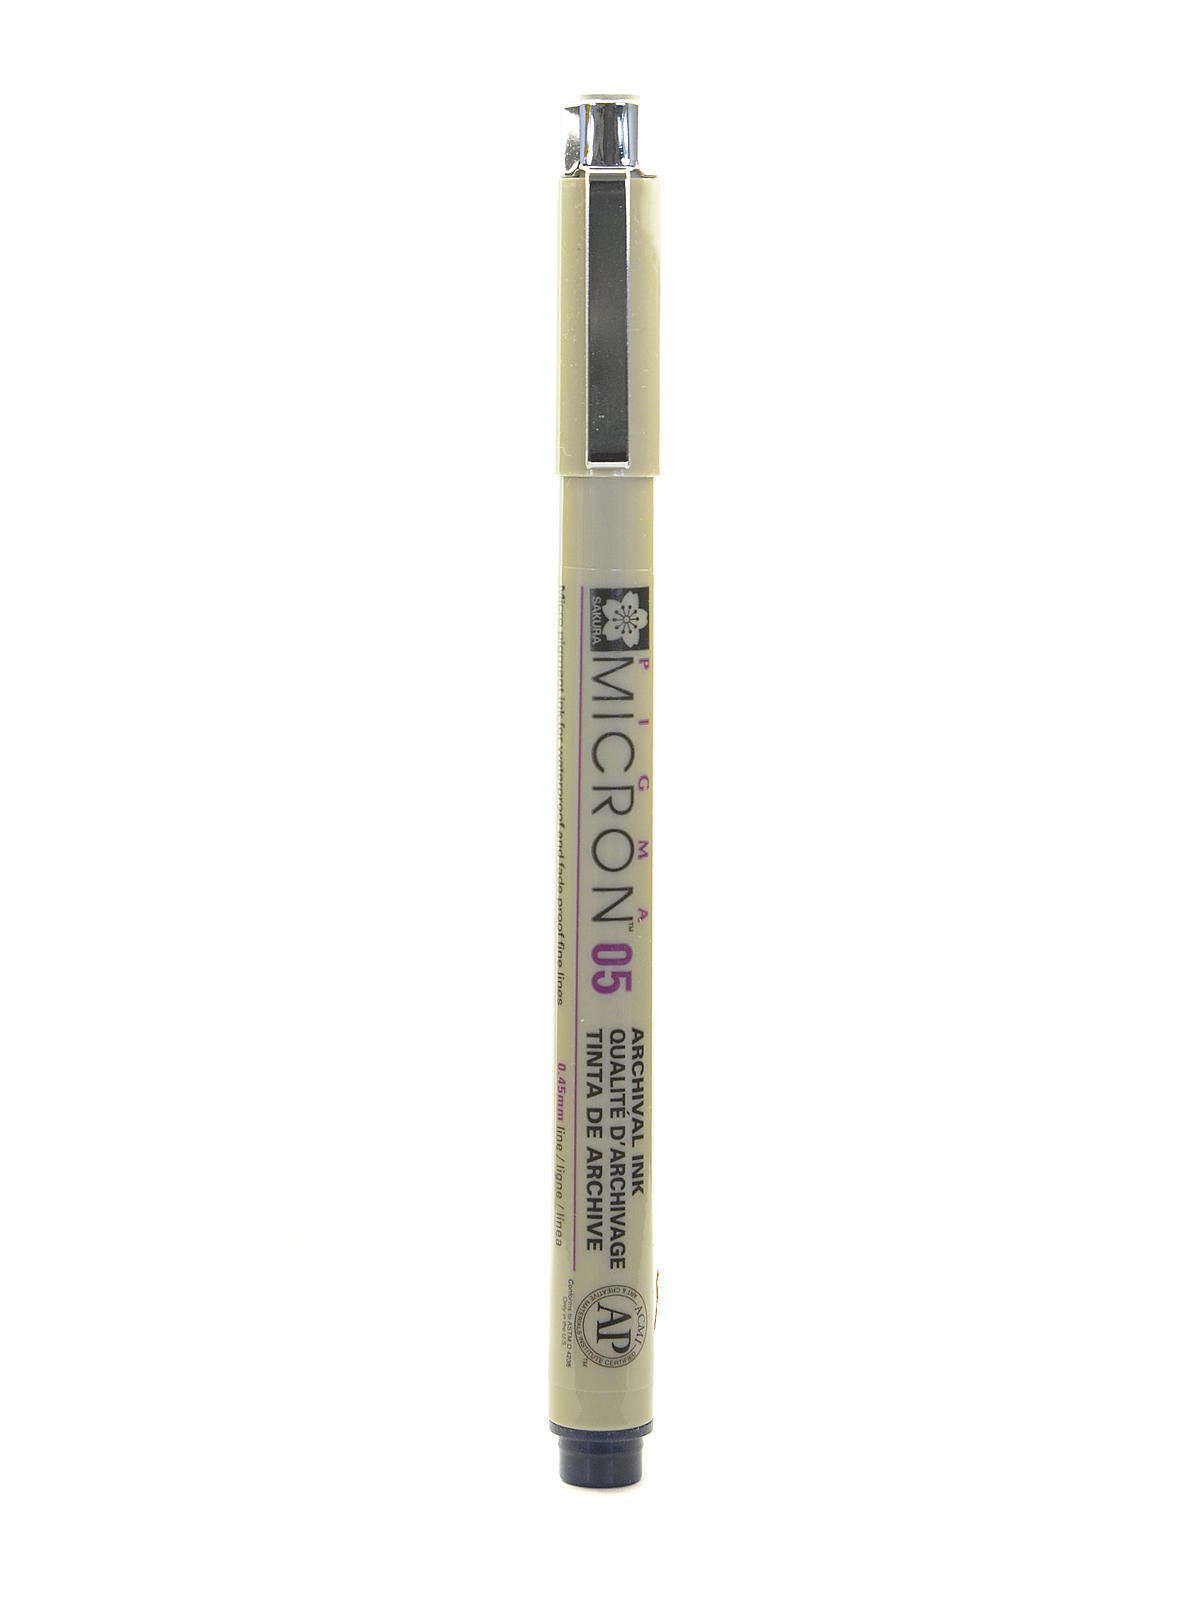 Pigma Micron 05 Fineliner Pen, 0.45mm, Black